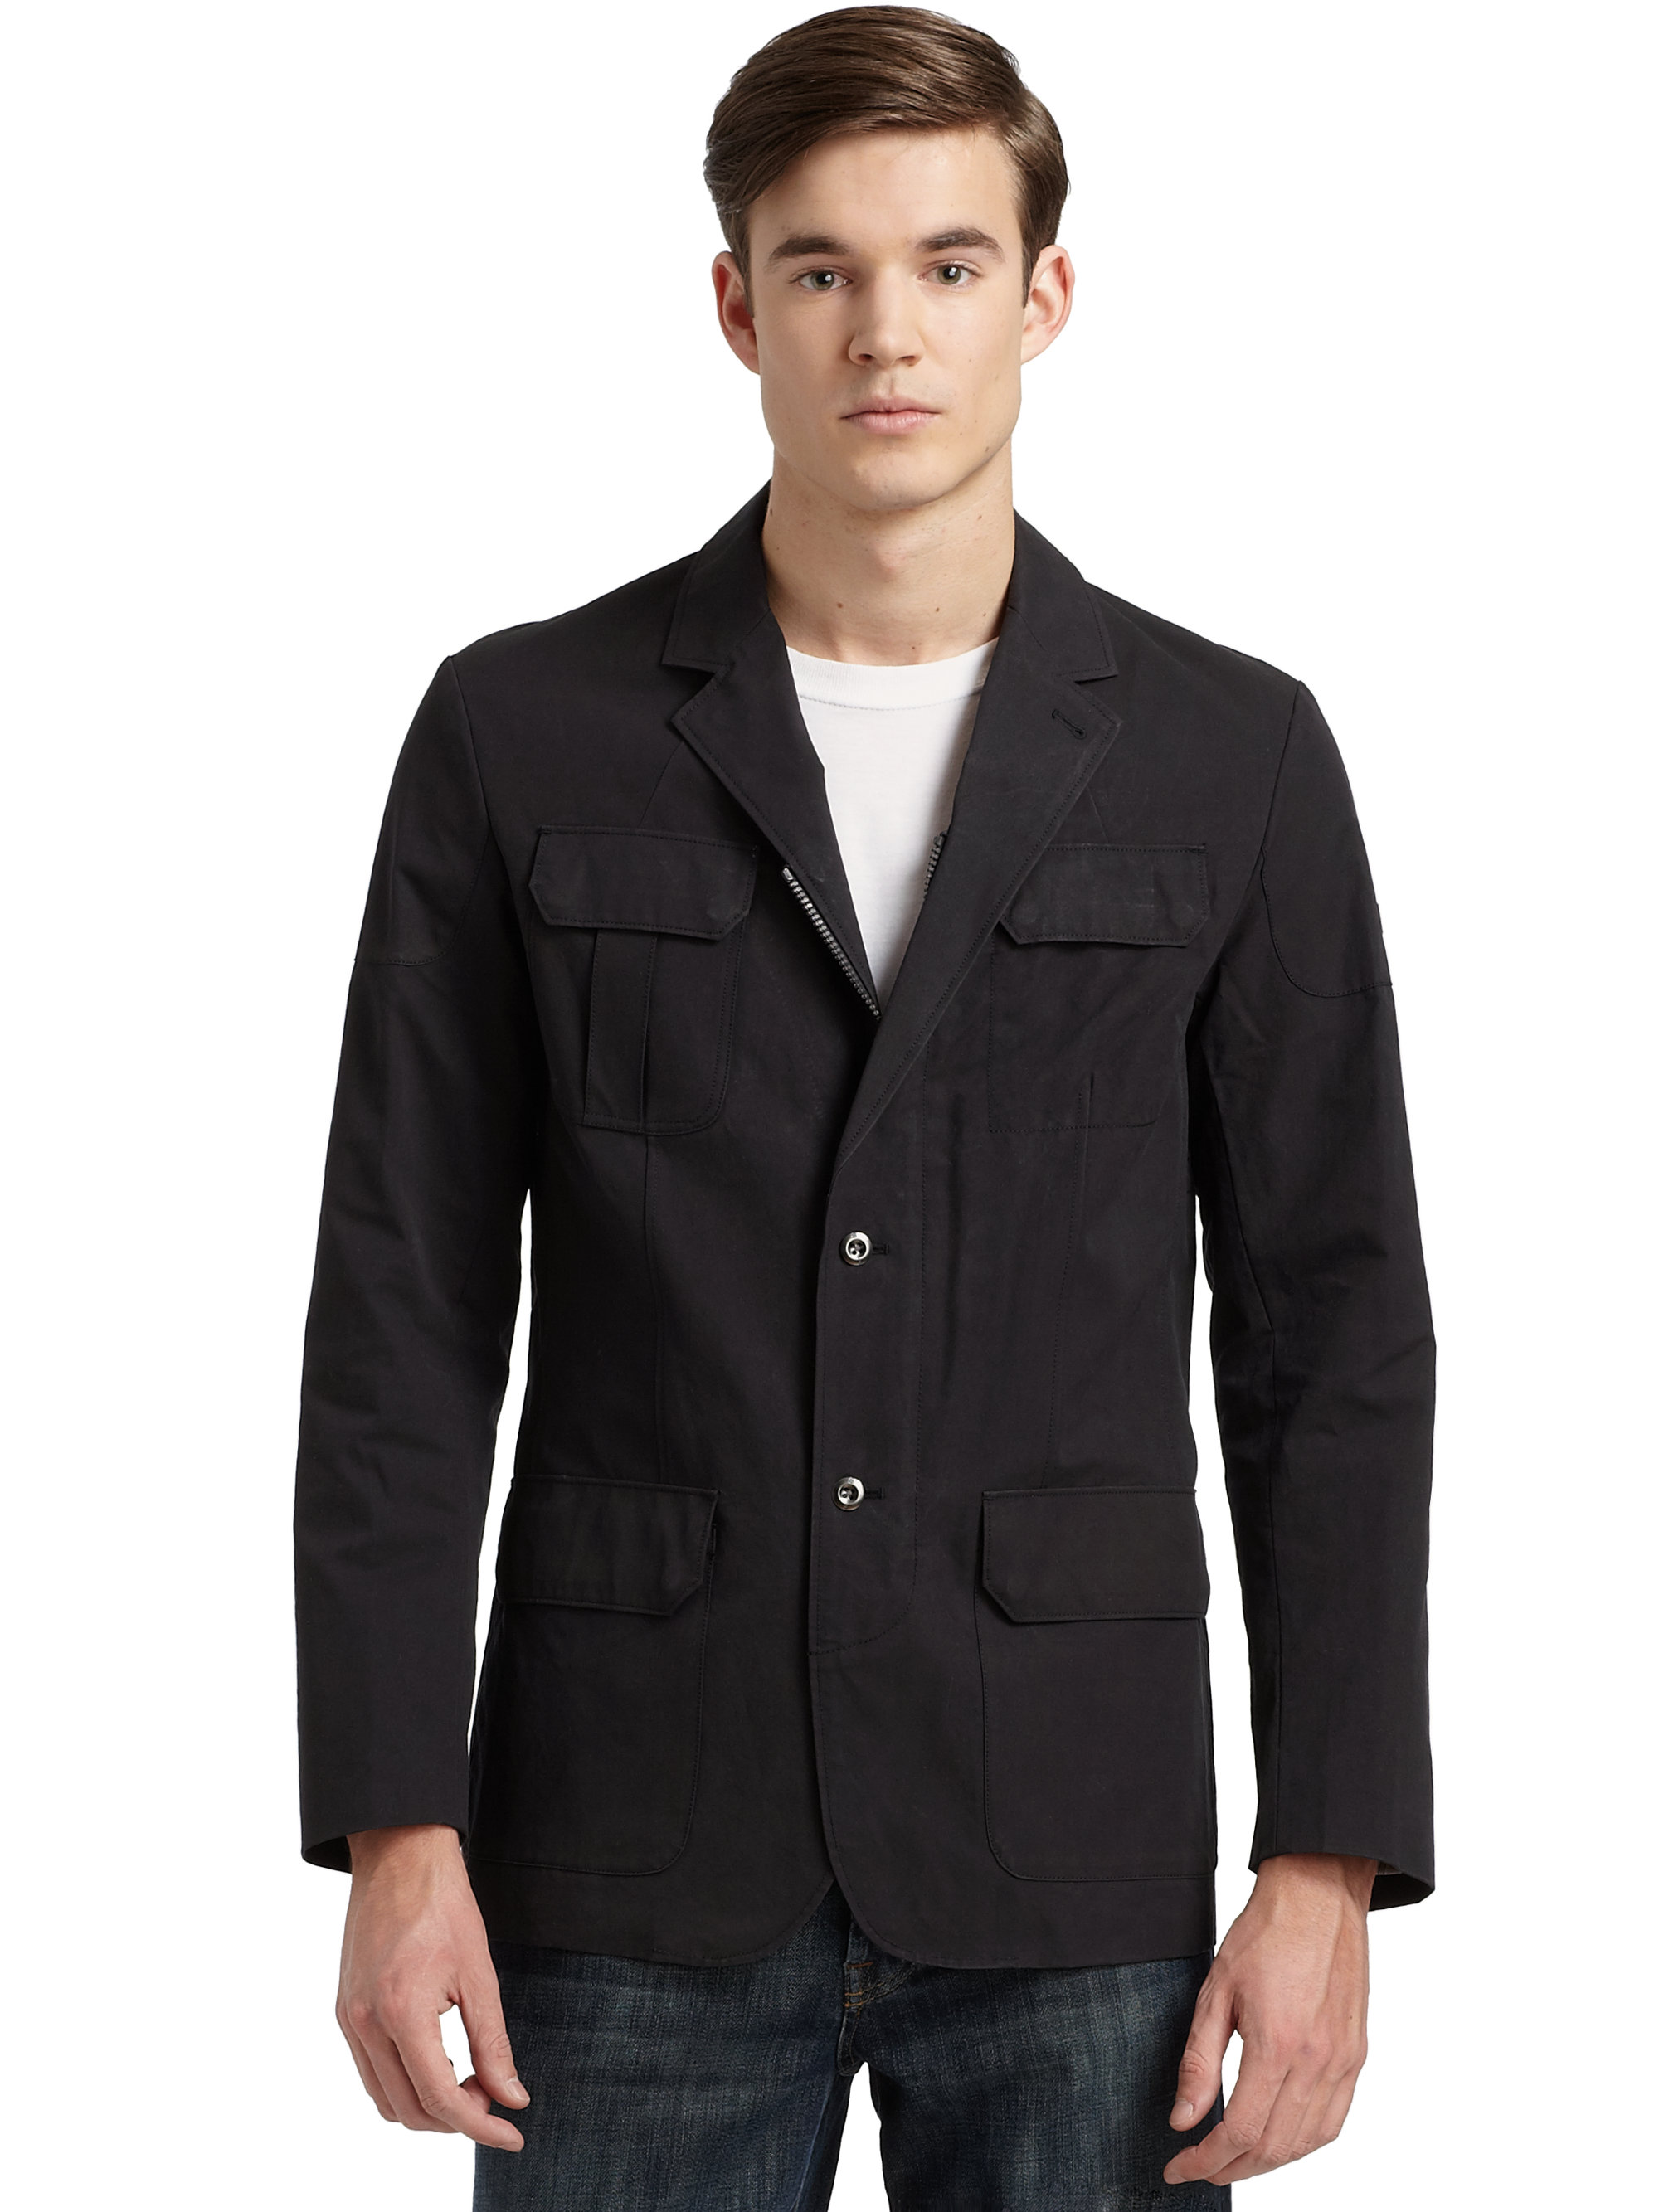 Lyst - Victorinox Waxed Cotton Blazer in Black for Men